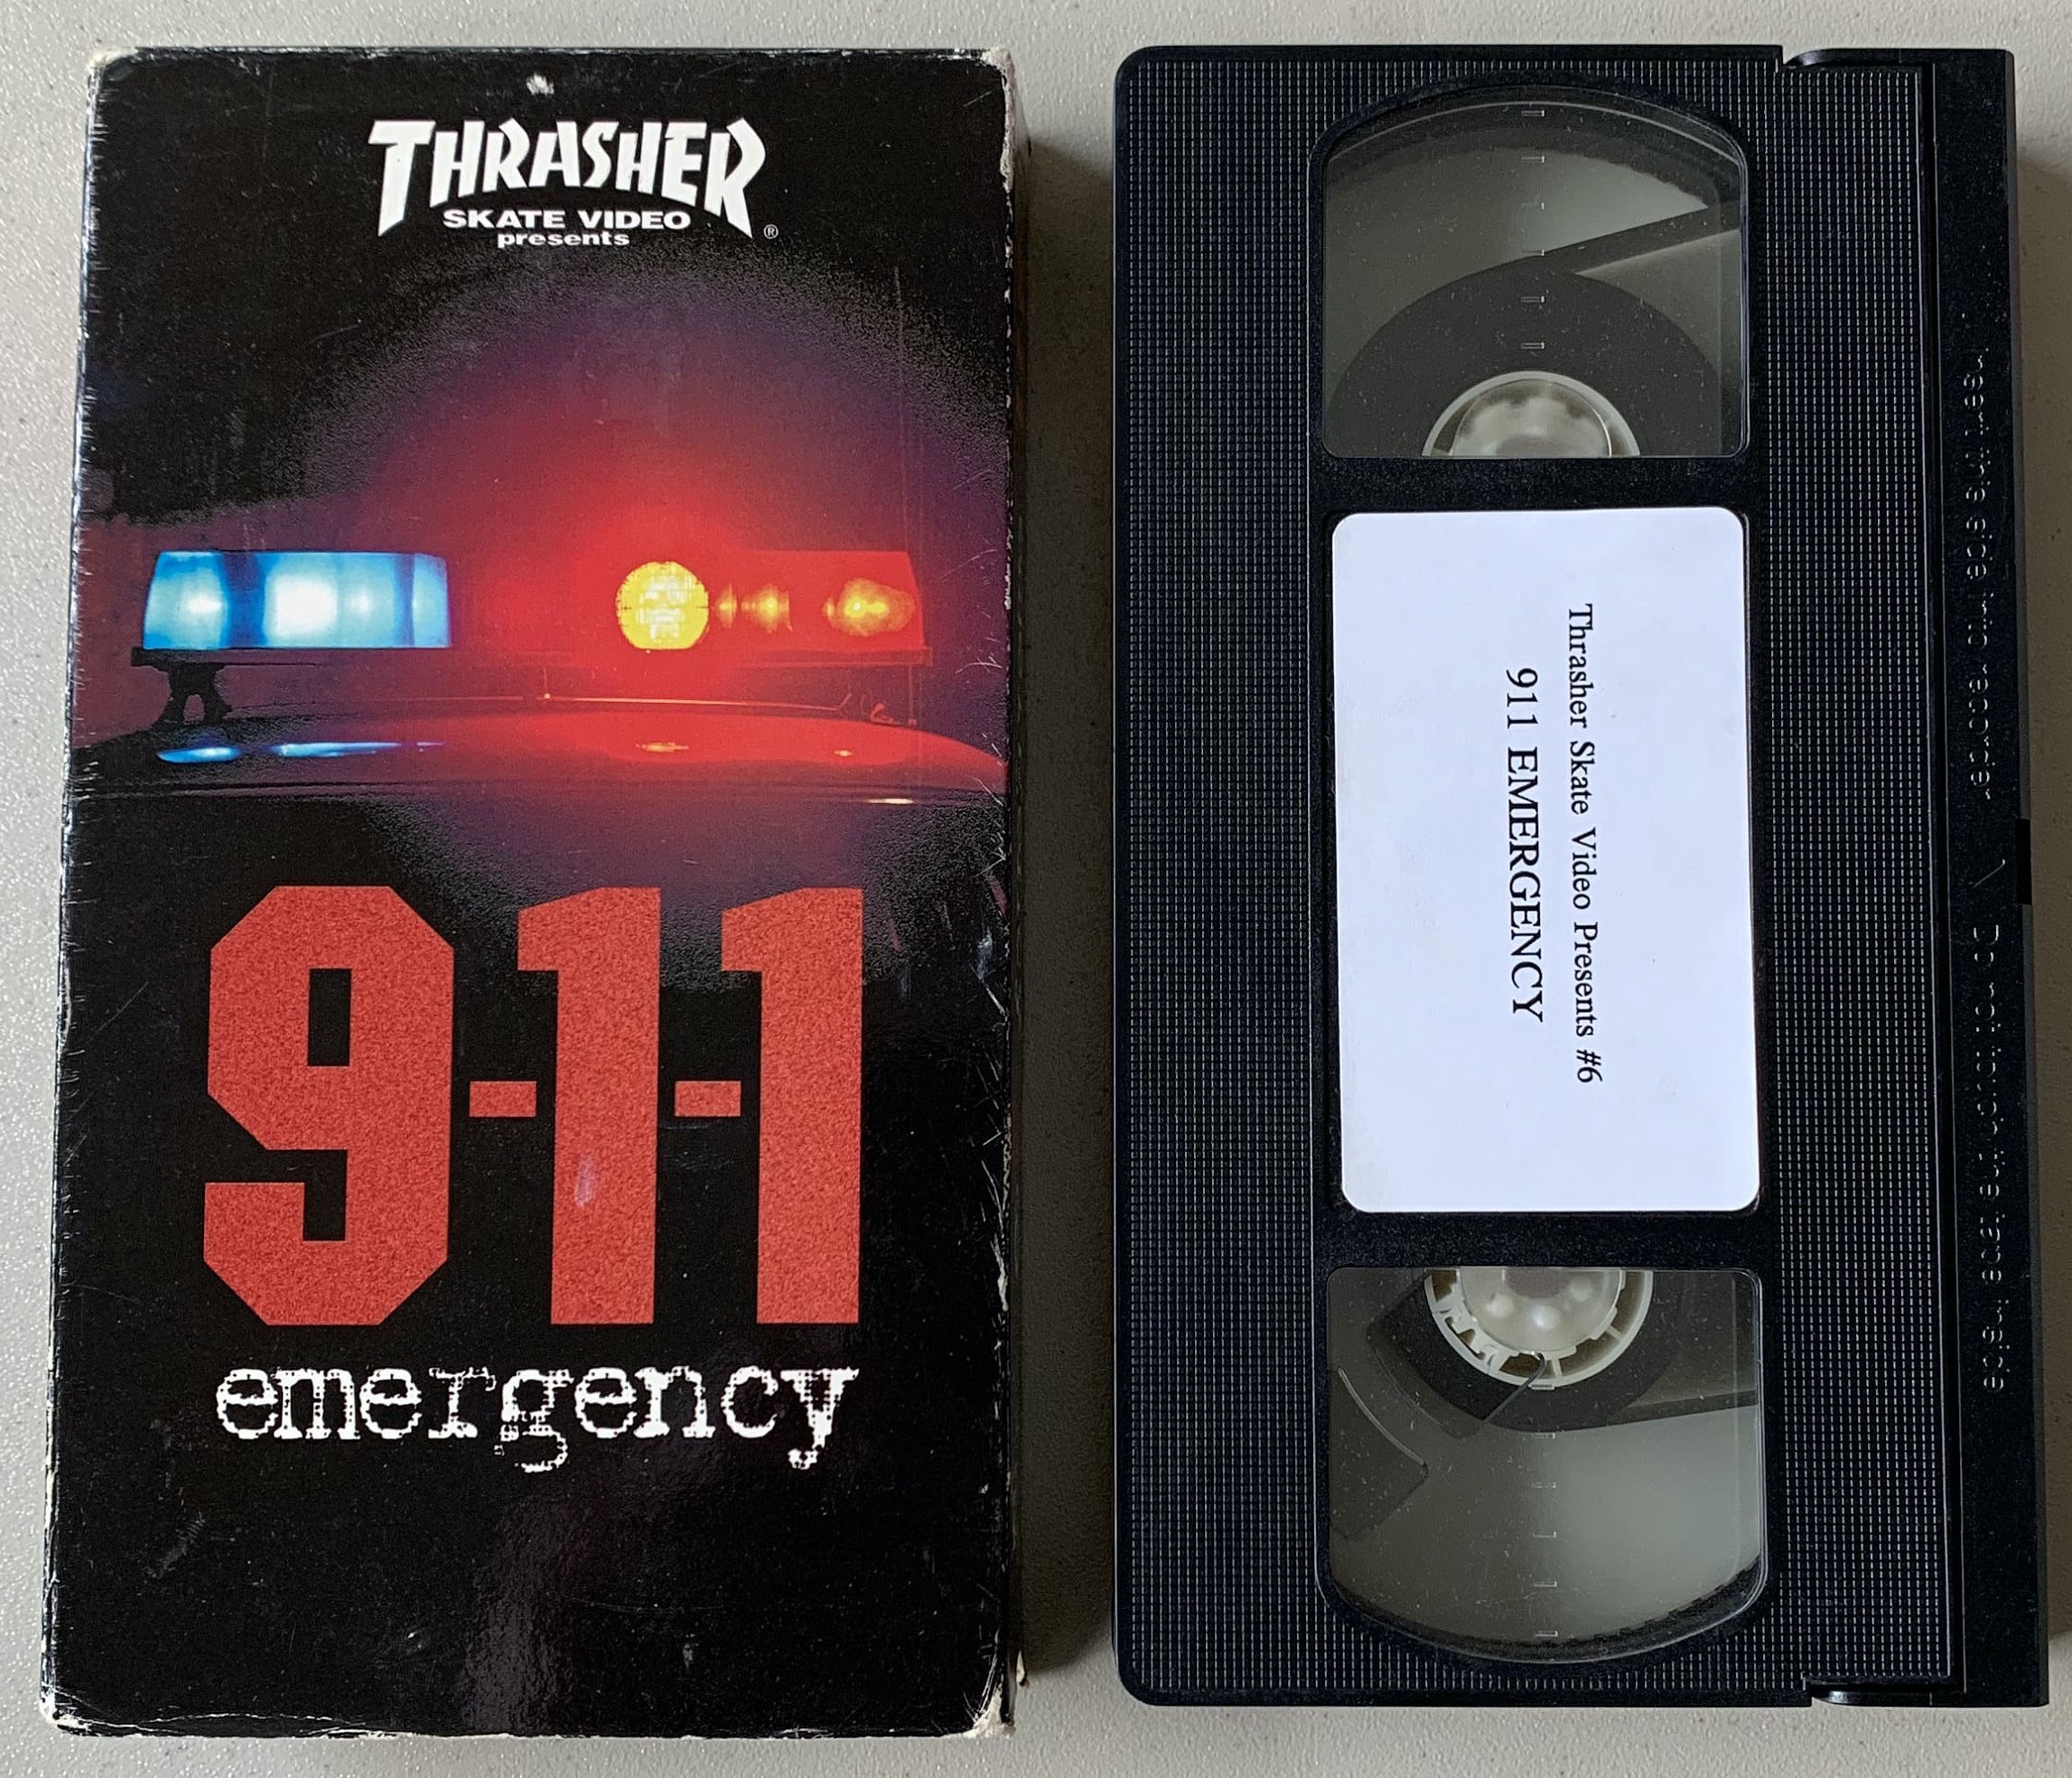 Thrasher - 911 Emergency cover